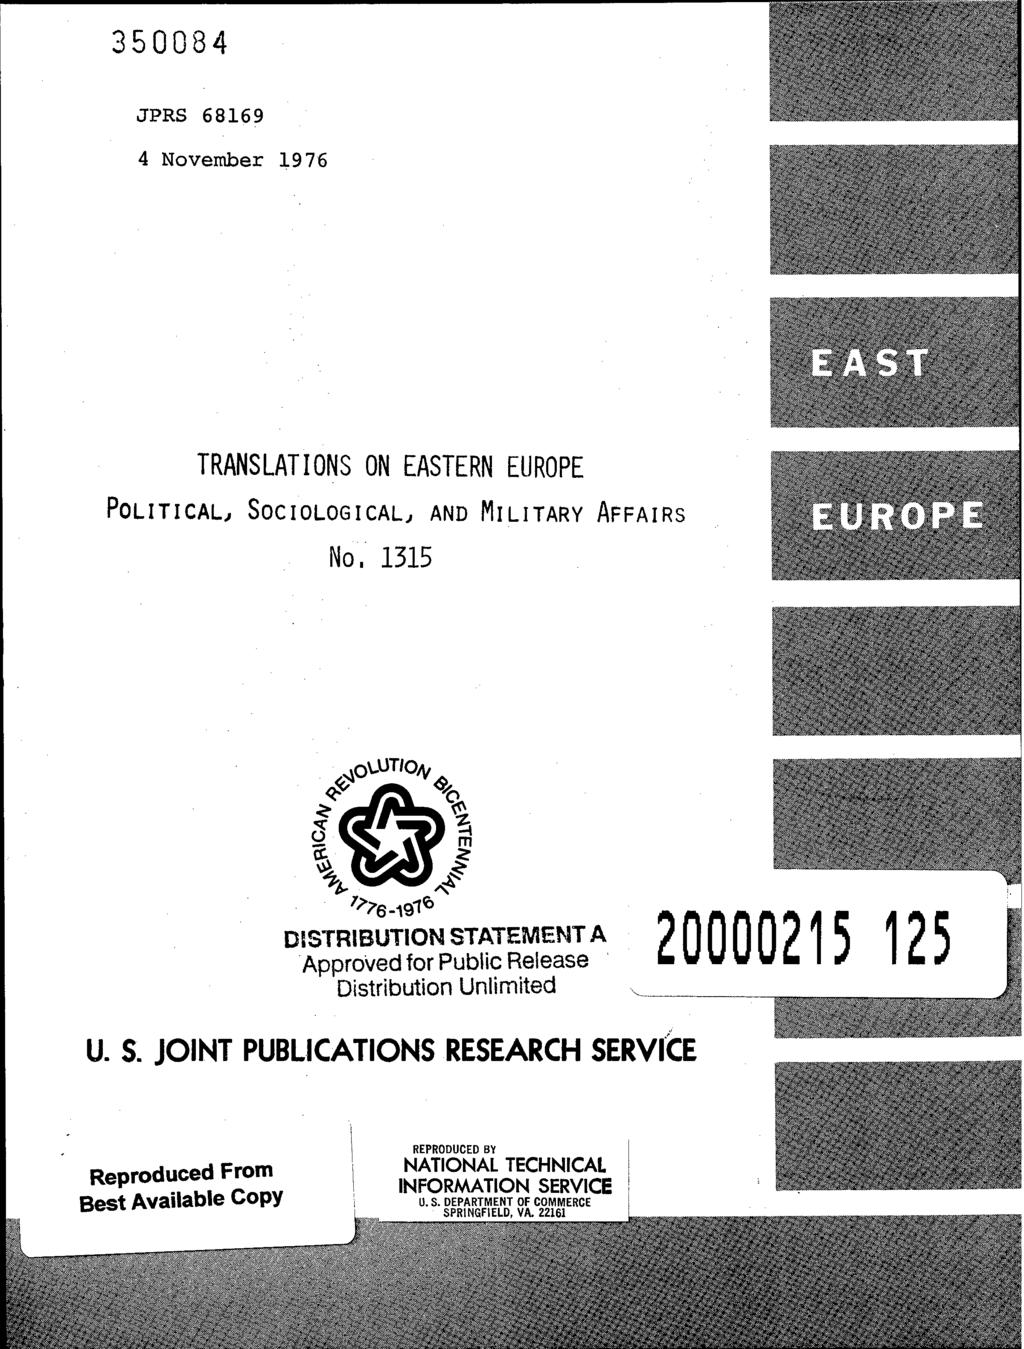 350084 i-r:=/^:-, - ; JPRS 68169 4 November 1976 TRANSLATIONS ON EASTERN EUROPE POLITICAL., SOCIOLOGICAL, AND MILITARY AFFAIRS No. 1315 i ".*'. ' OV.